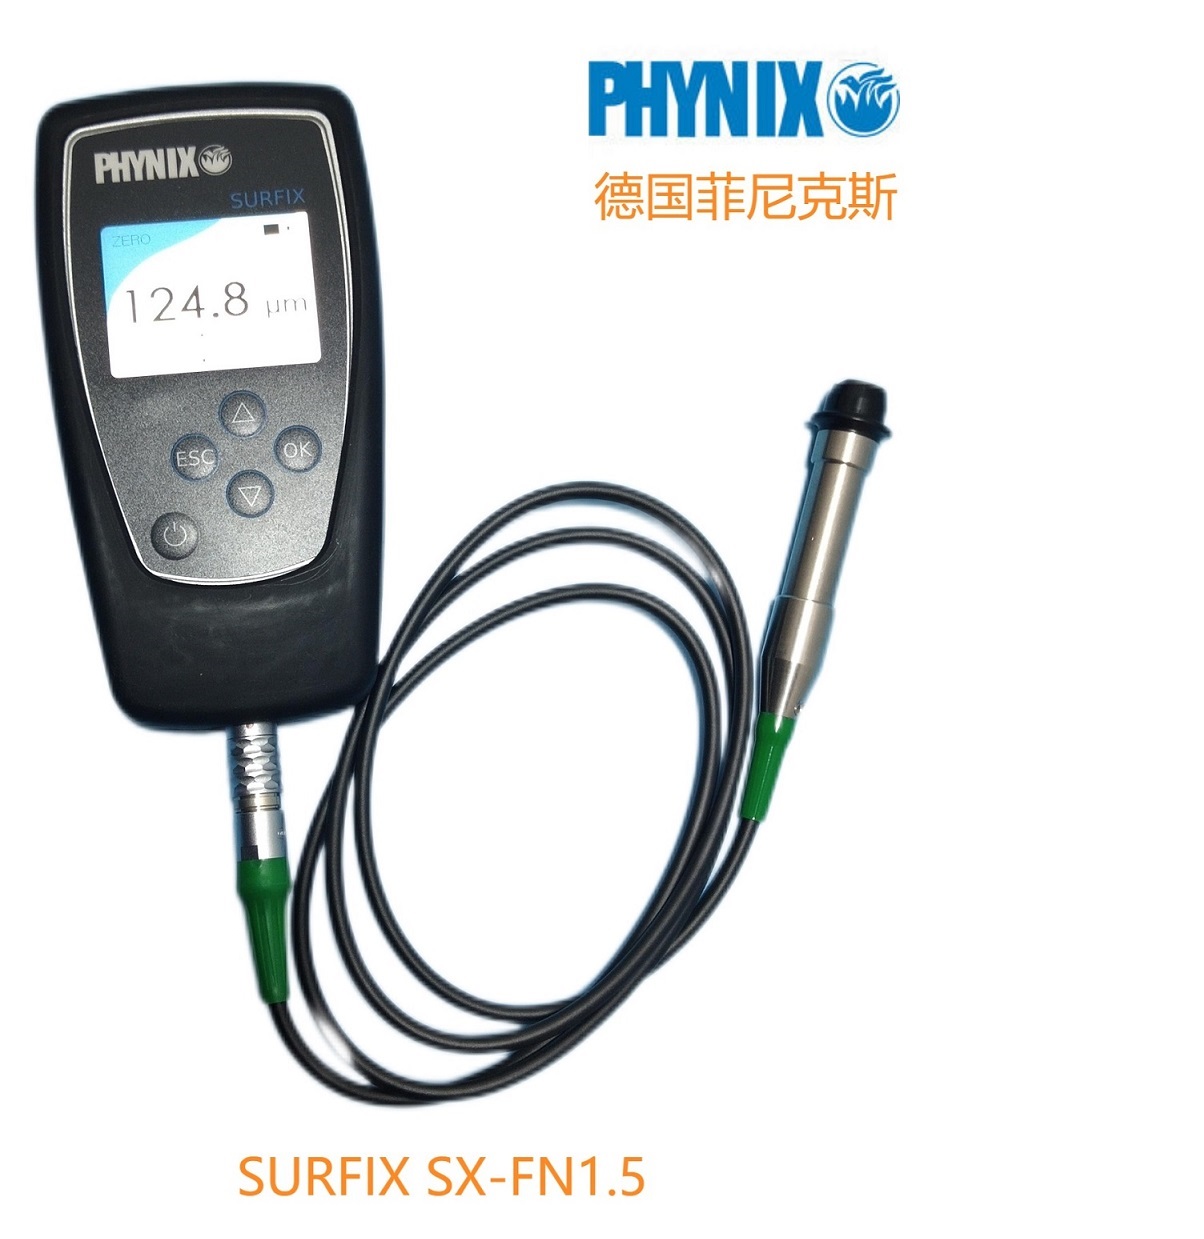 PHYNIX SURFIX SX-FN1.5涂层测厚仪-上海里泰电子仪器